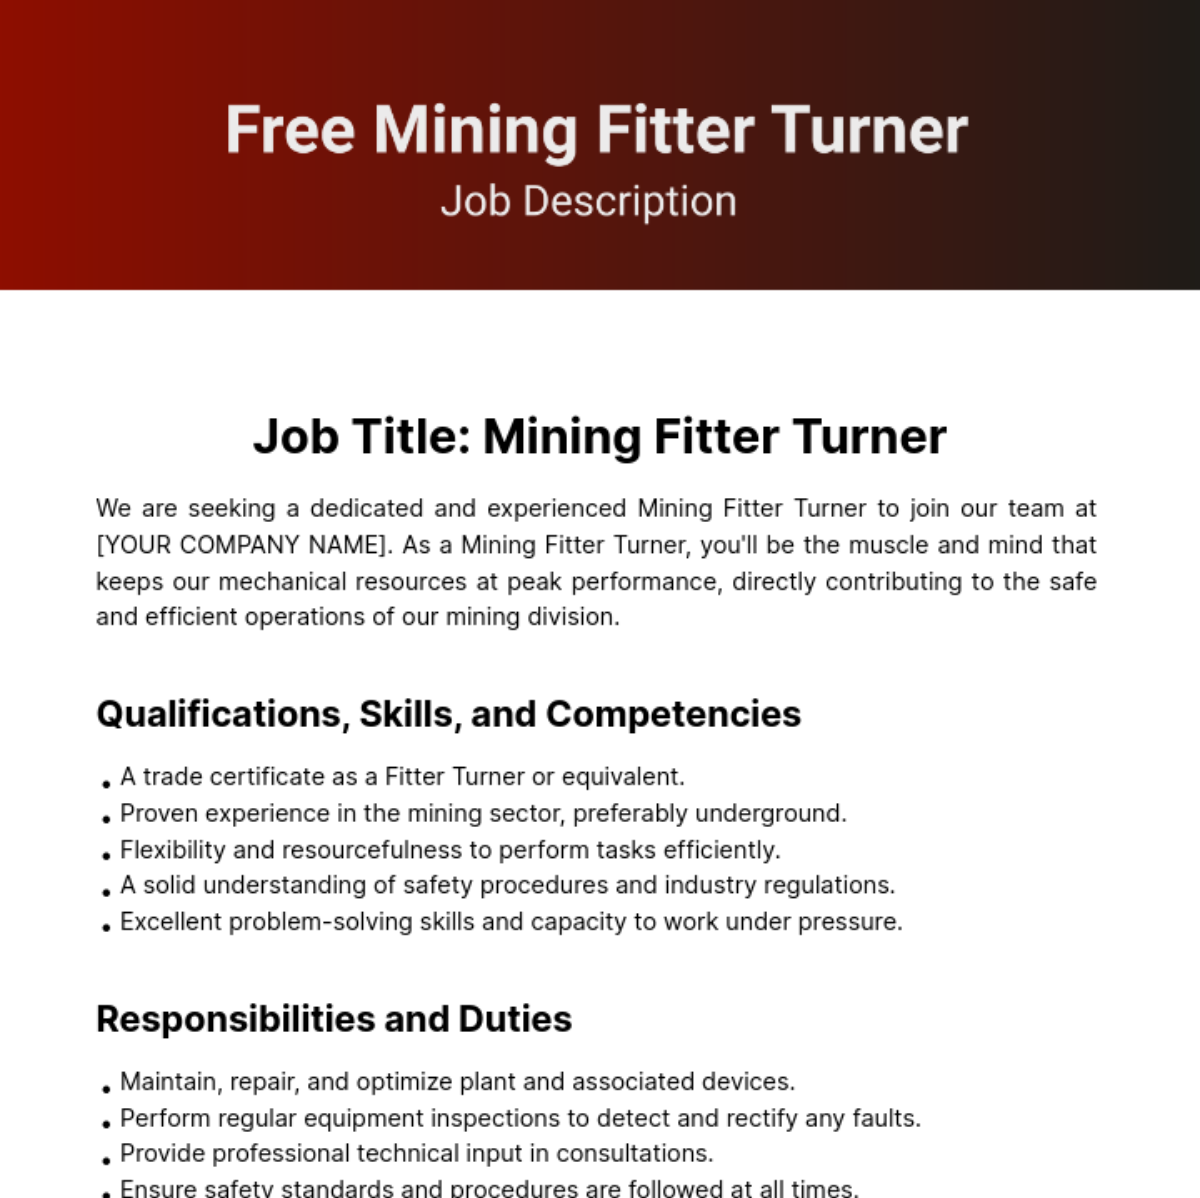 Free Mining Fitter Turner Job Description Template